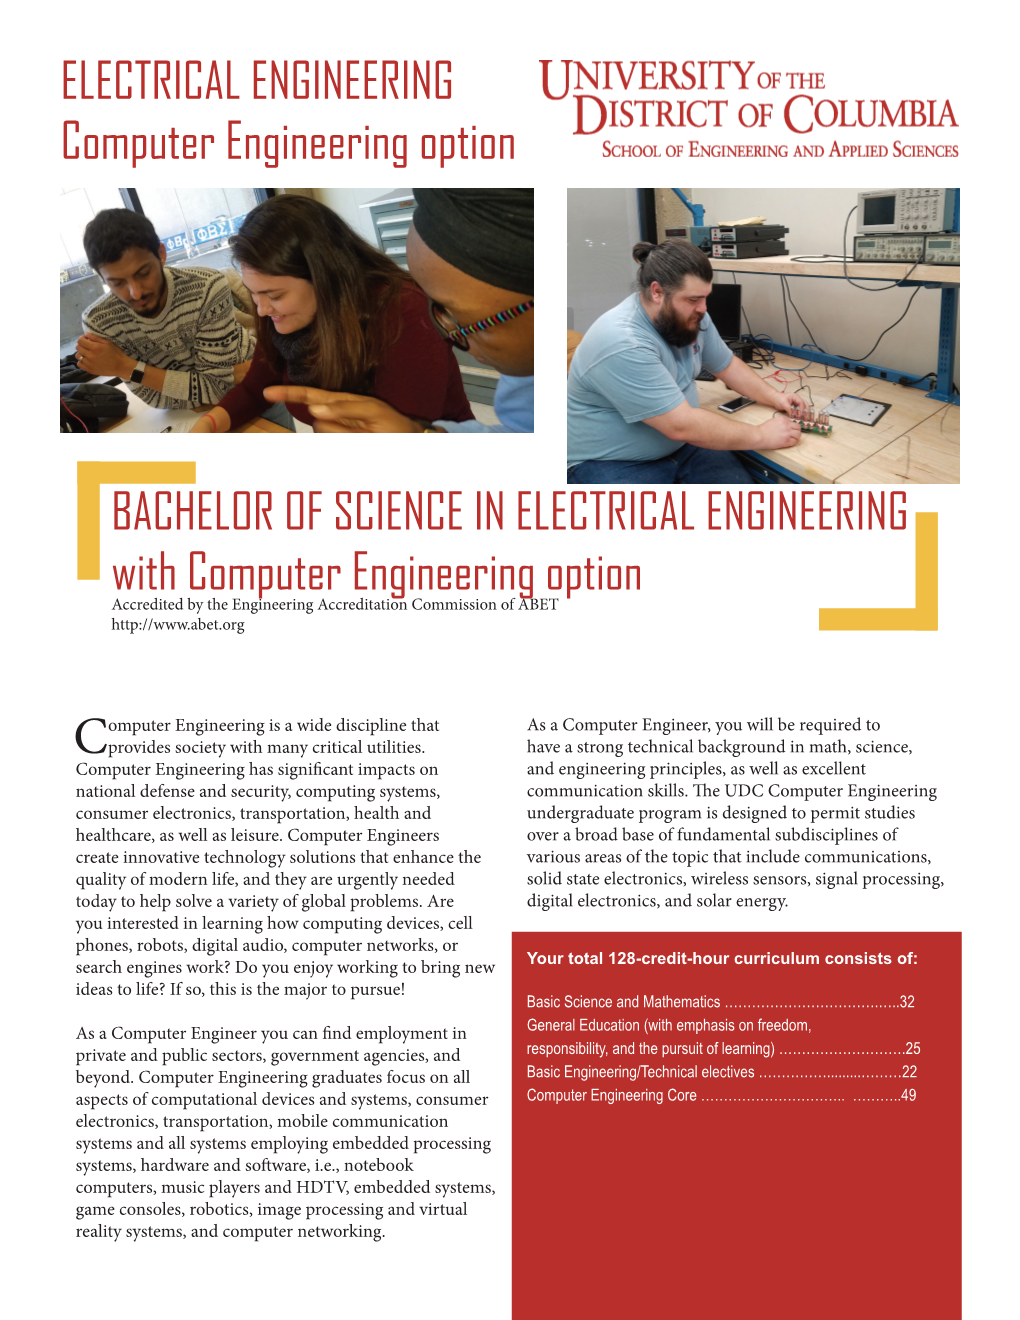 BS Electrical Engineering Computer Engineering Handout.Indd